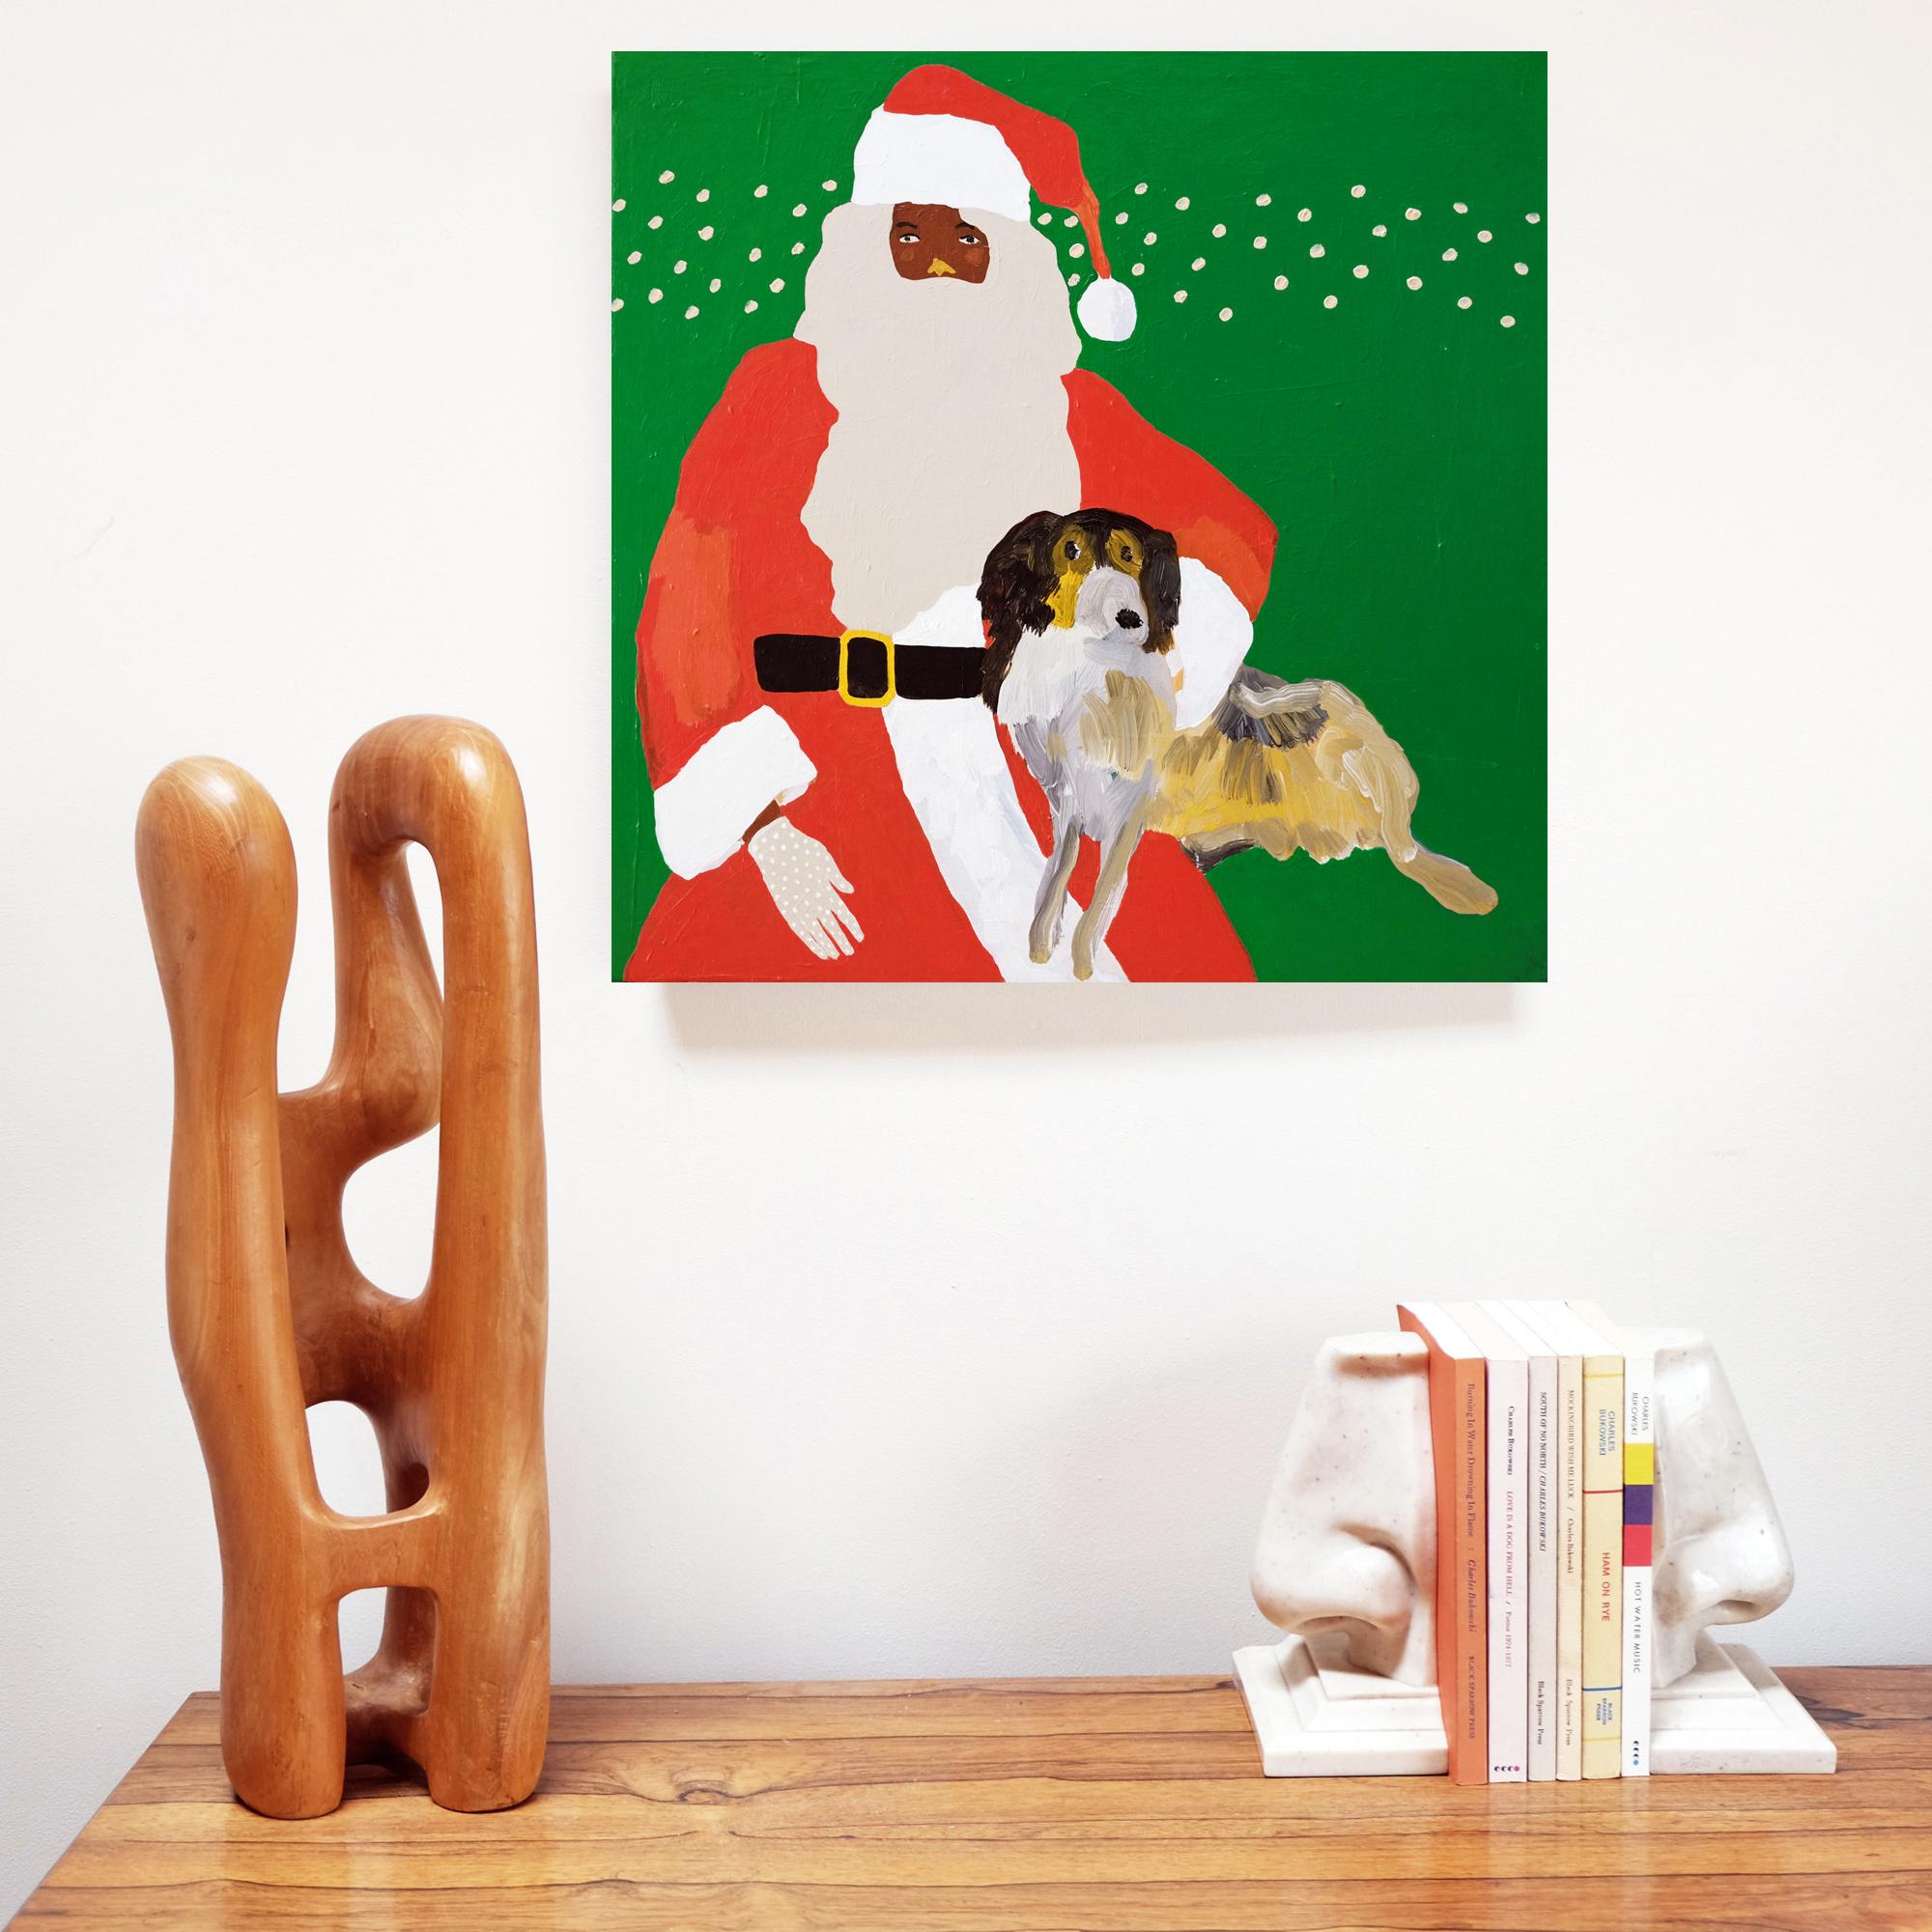 English 'A Secret Santa' Figurative Painting by Alan Fears Pop Art